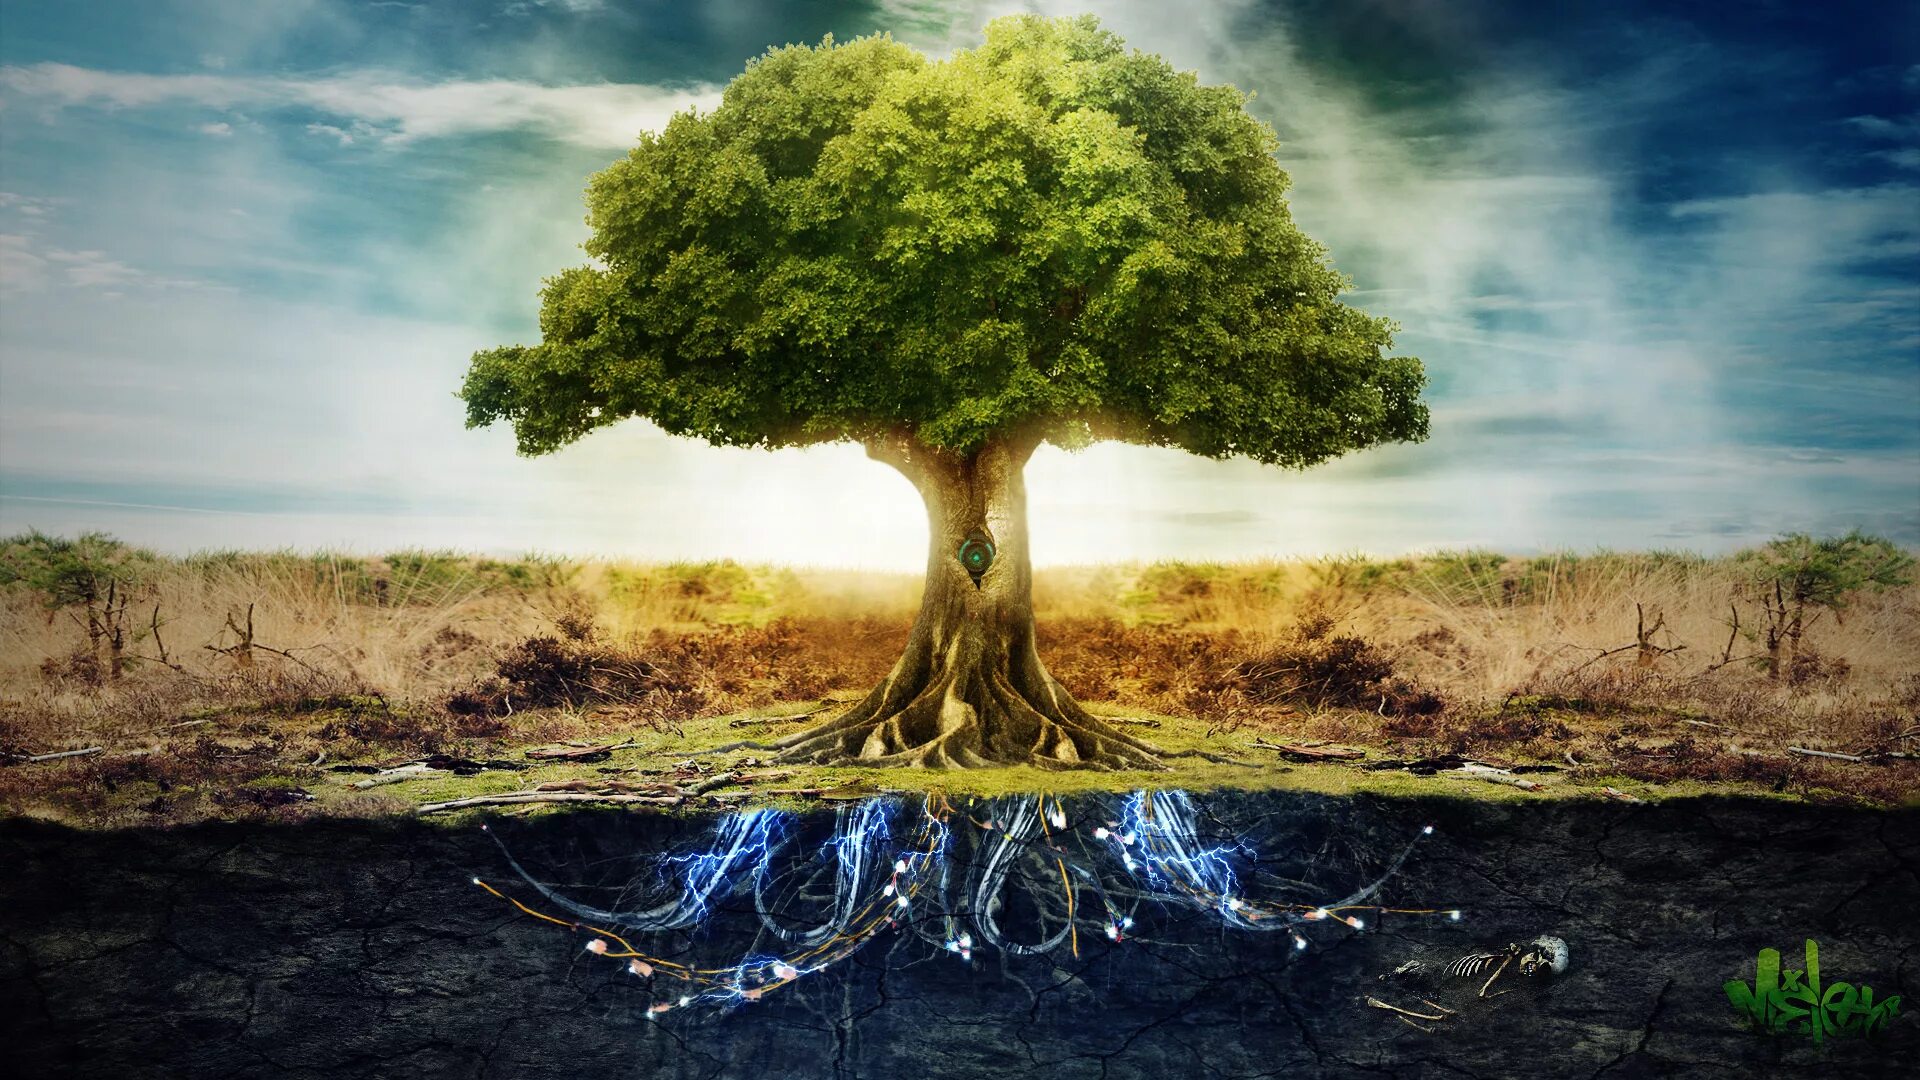 Иггдрасиль мировое Древо. Родовое Древо корни рода. "Tree of Life" ("дерево жизни") by degree. Красивое дерево.